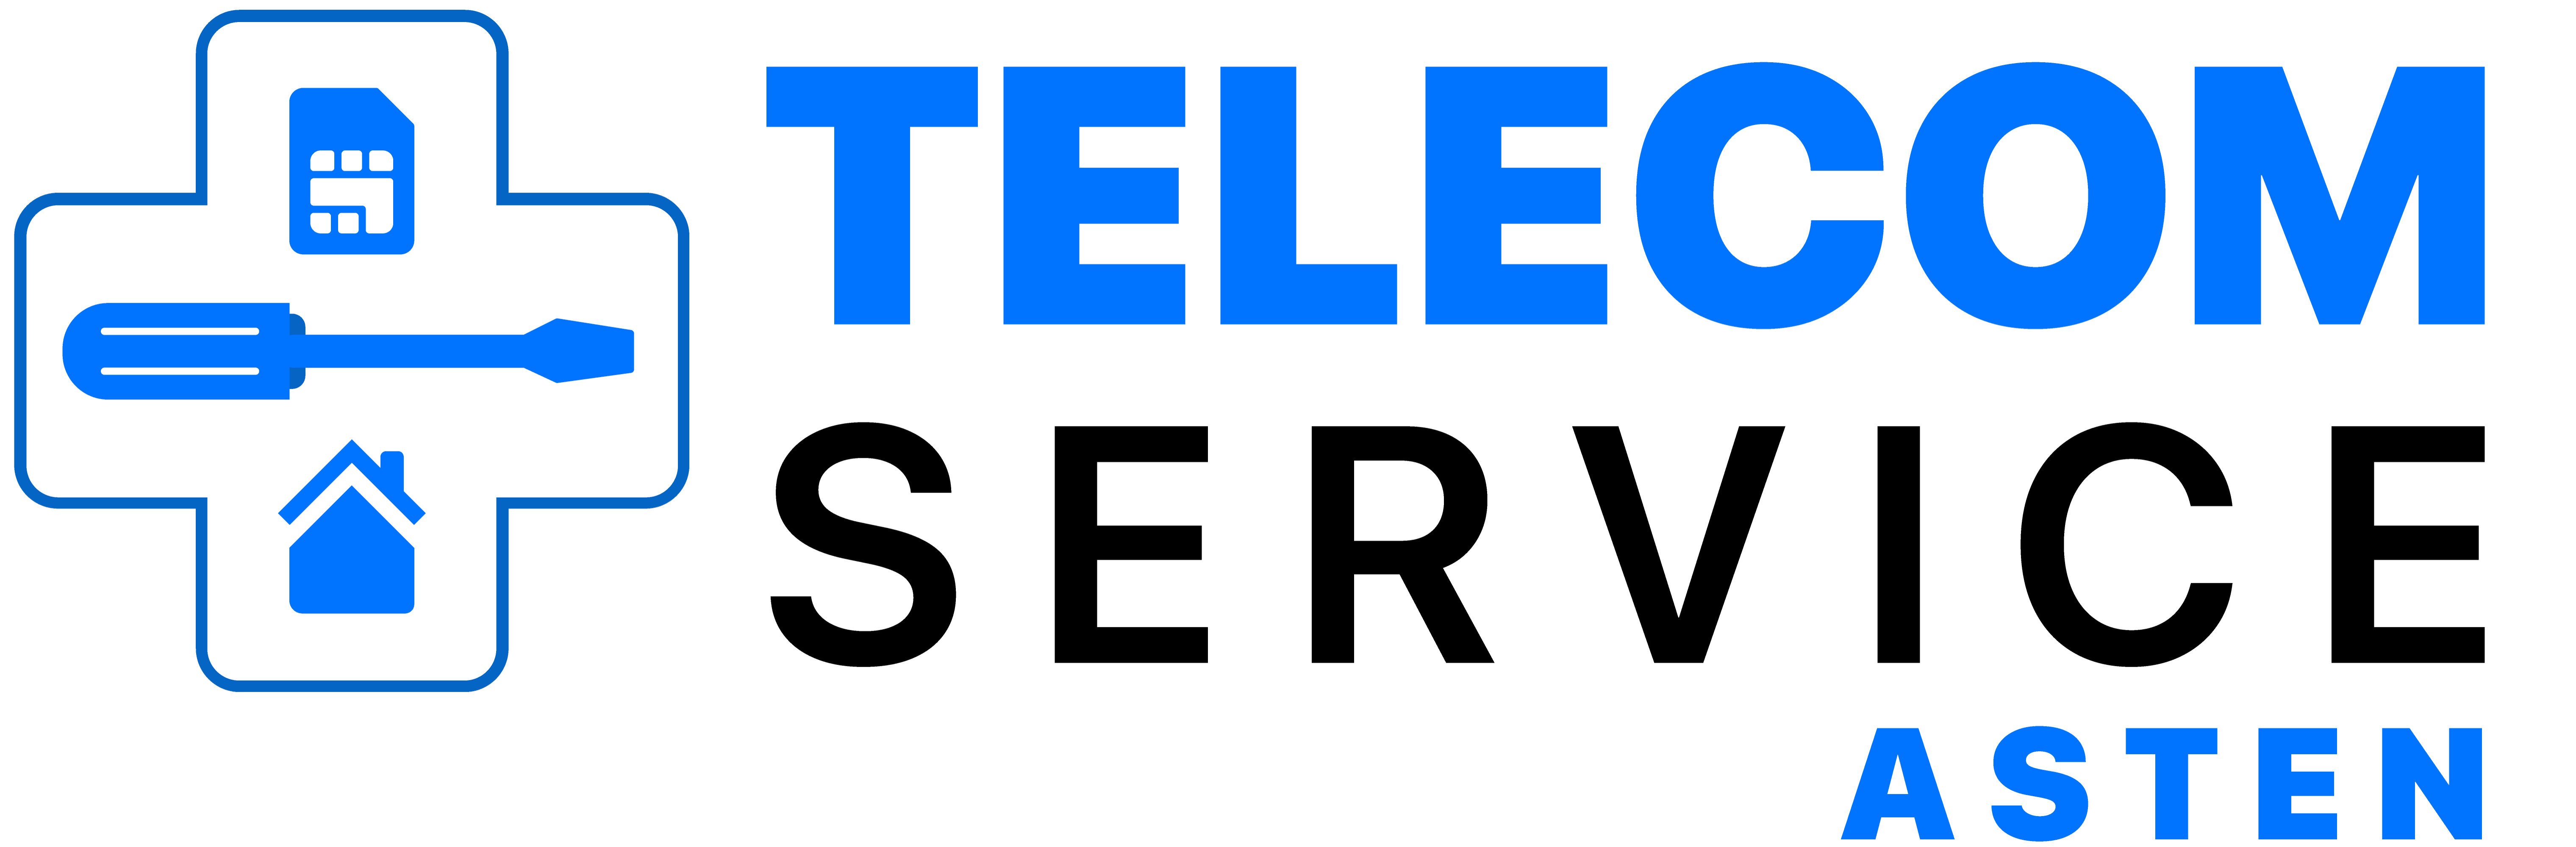 Telecom Service Asten